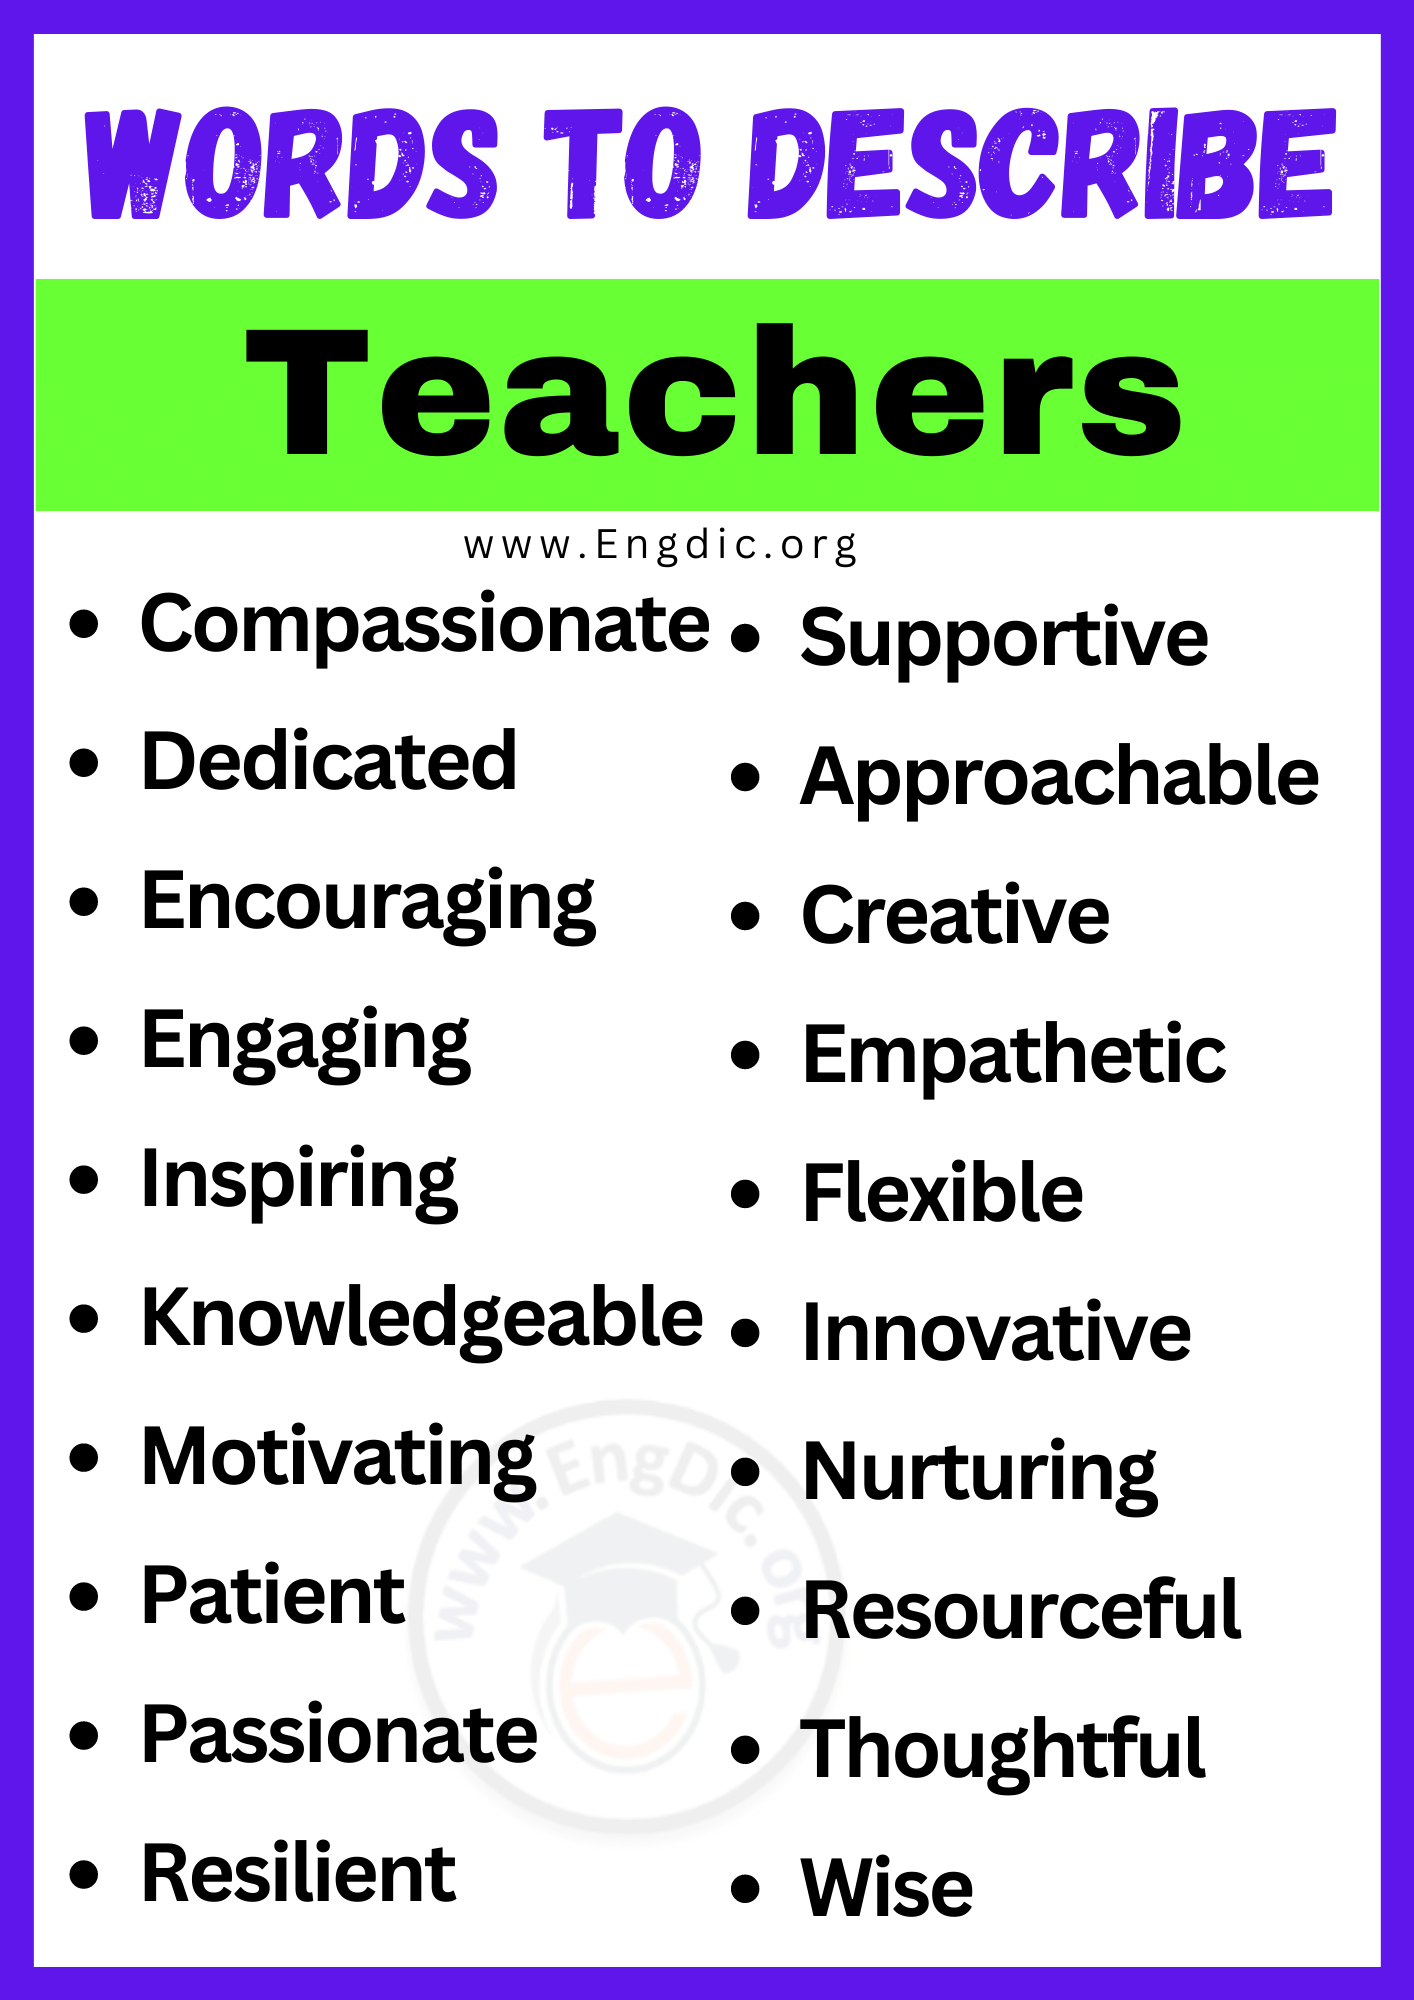 Words to Describe Teachers